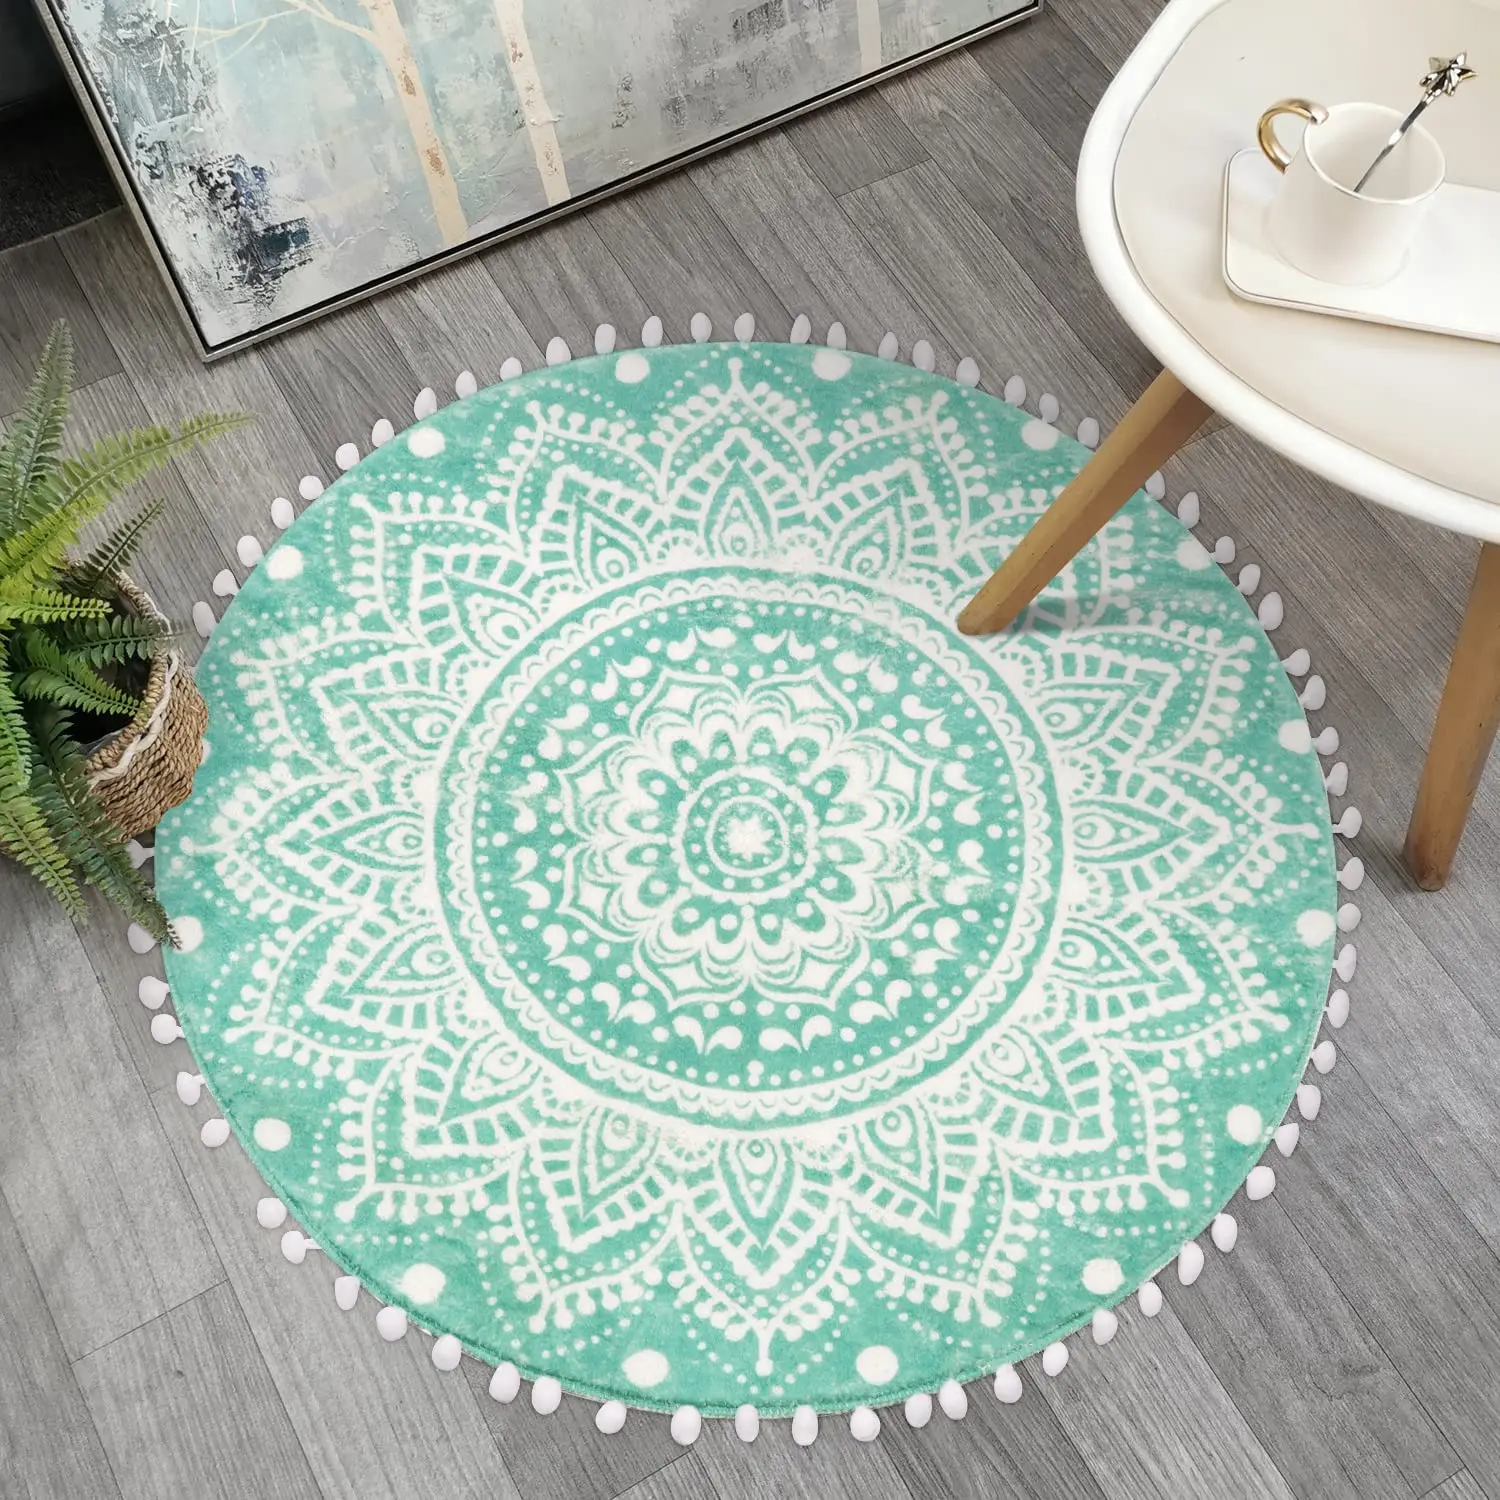 source small round rug boho bathroom rugs with pom poms fringe